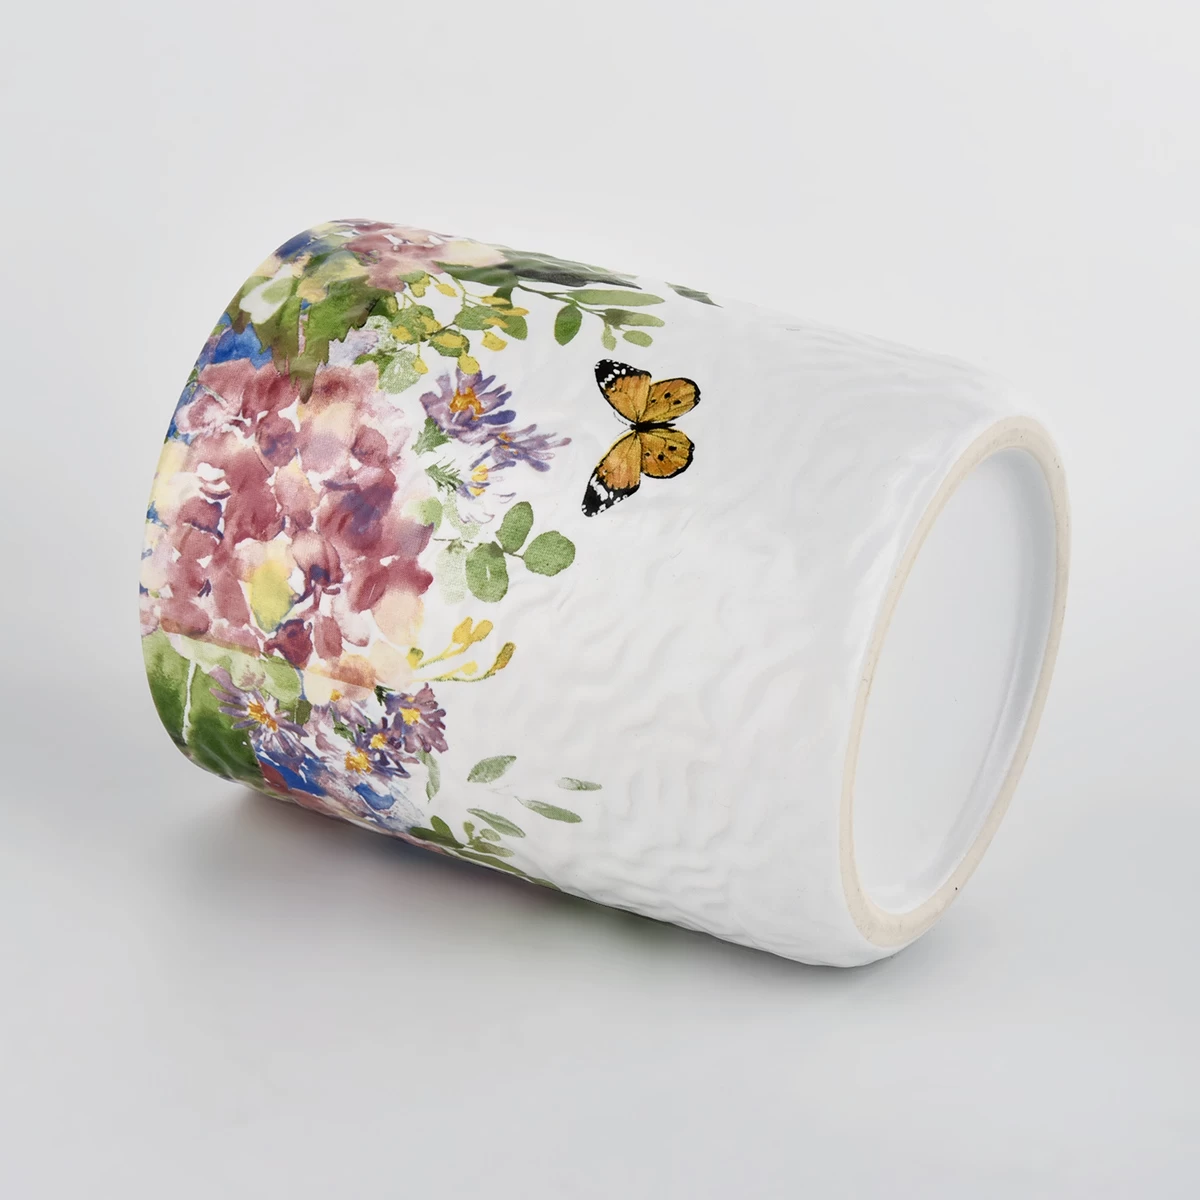 white ceramic vessel with colorful print